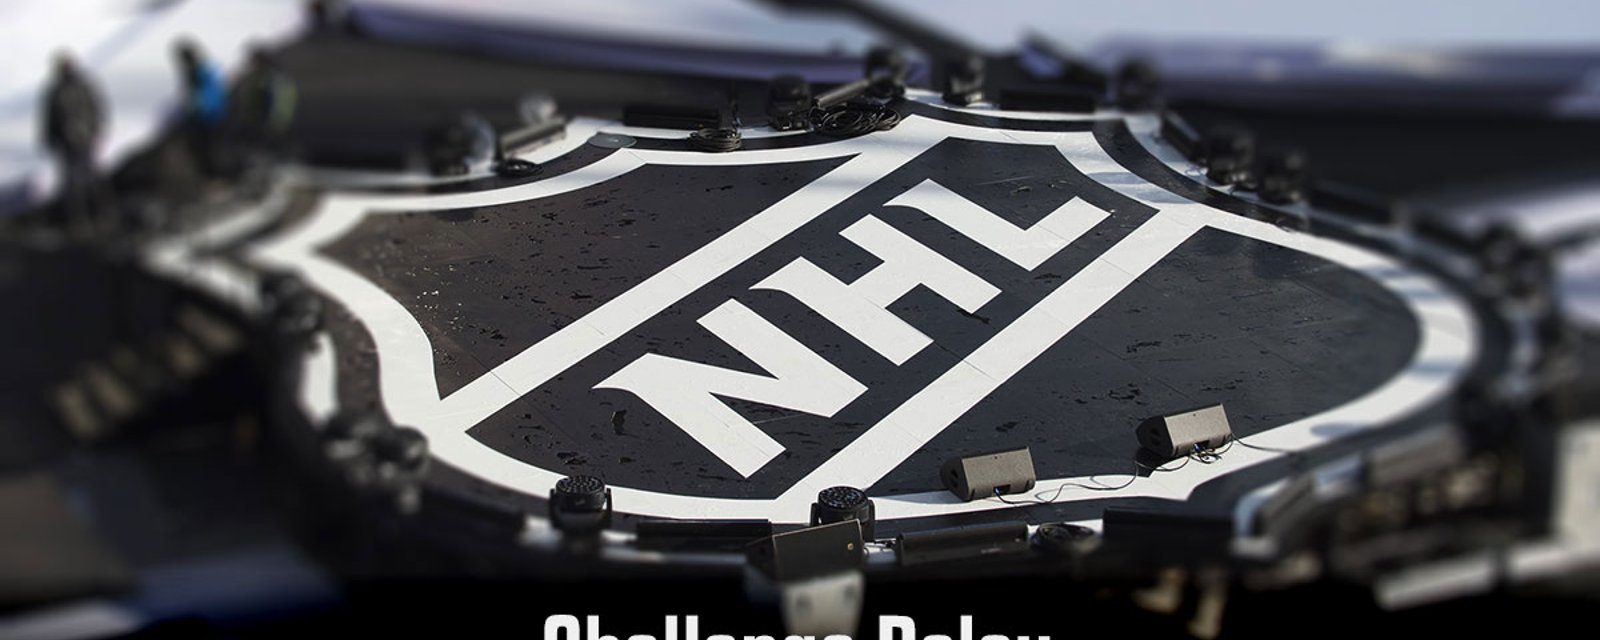 Must See: Gatorade NHL Skill challenge relay winner!